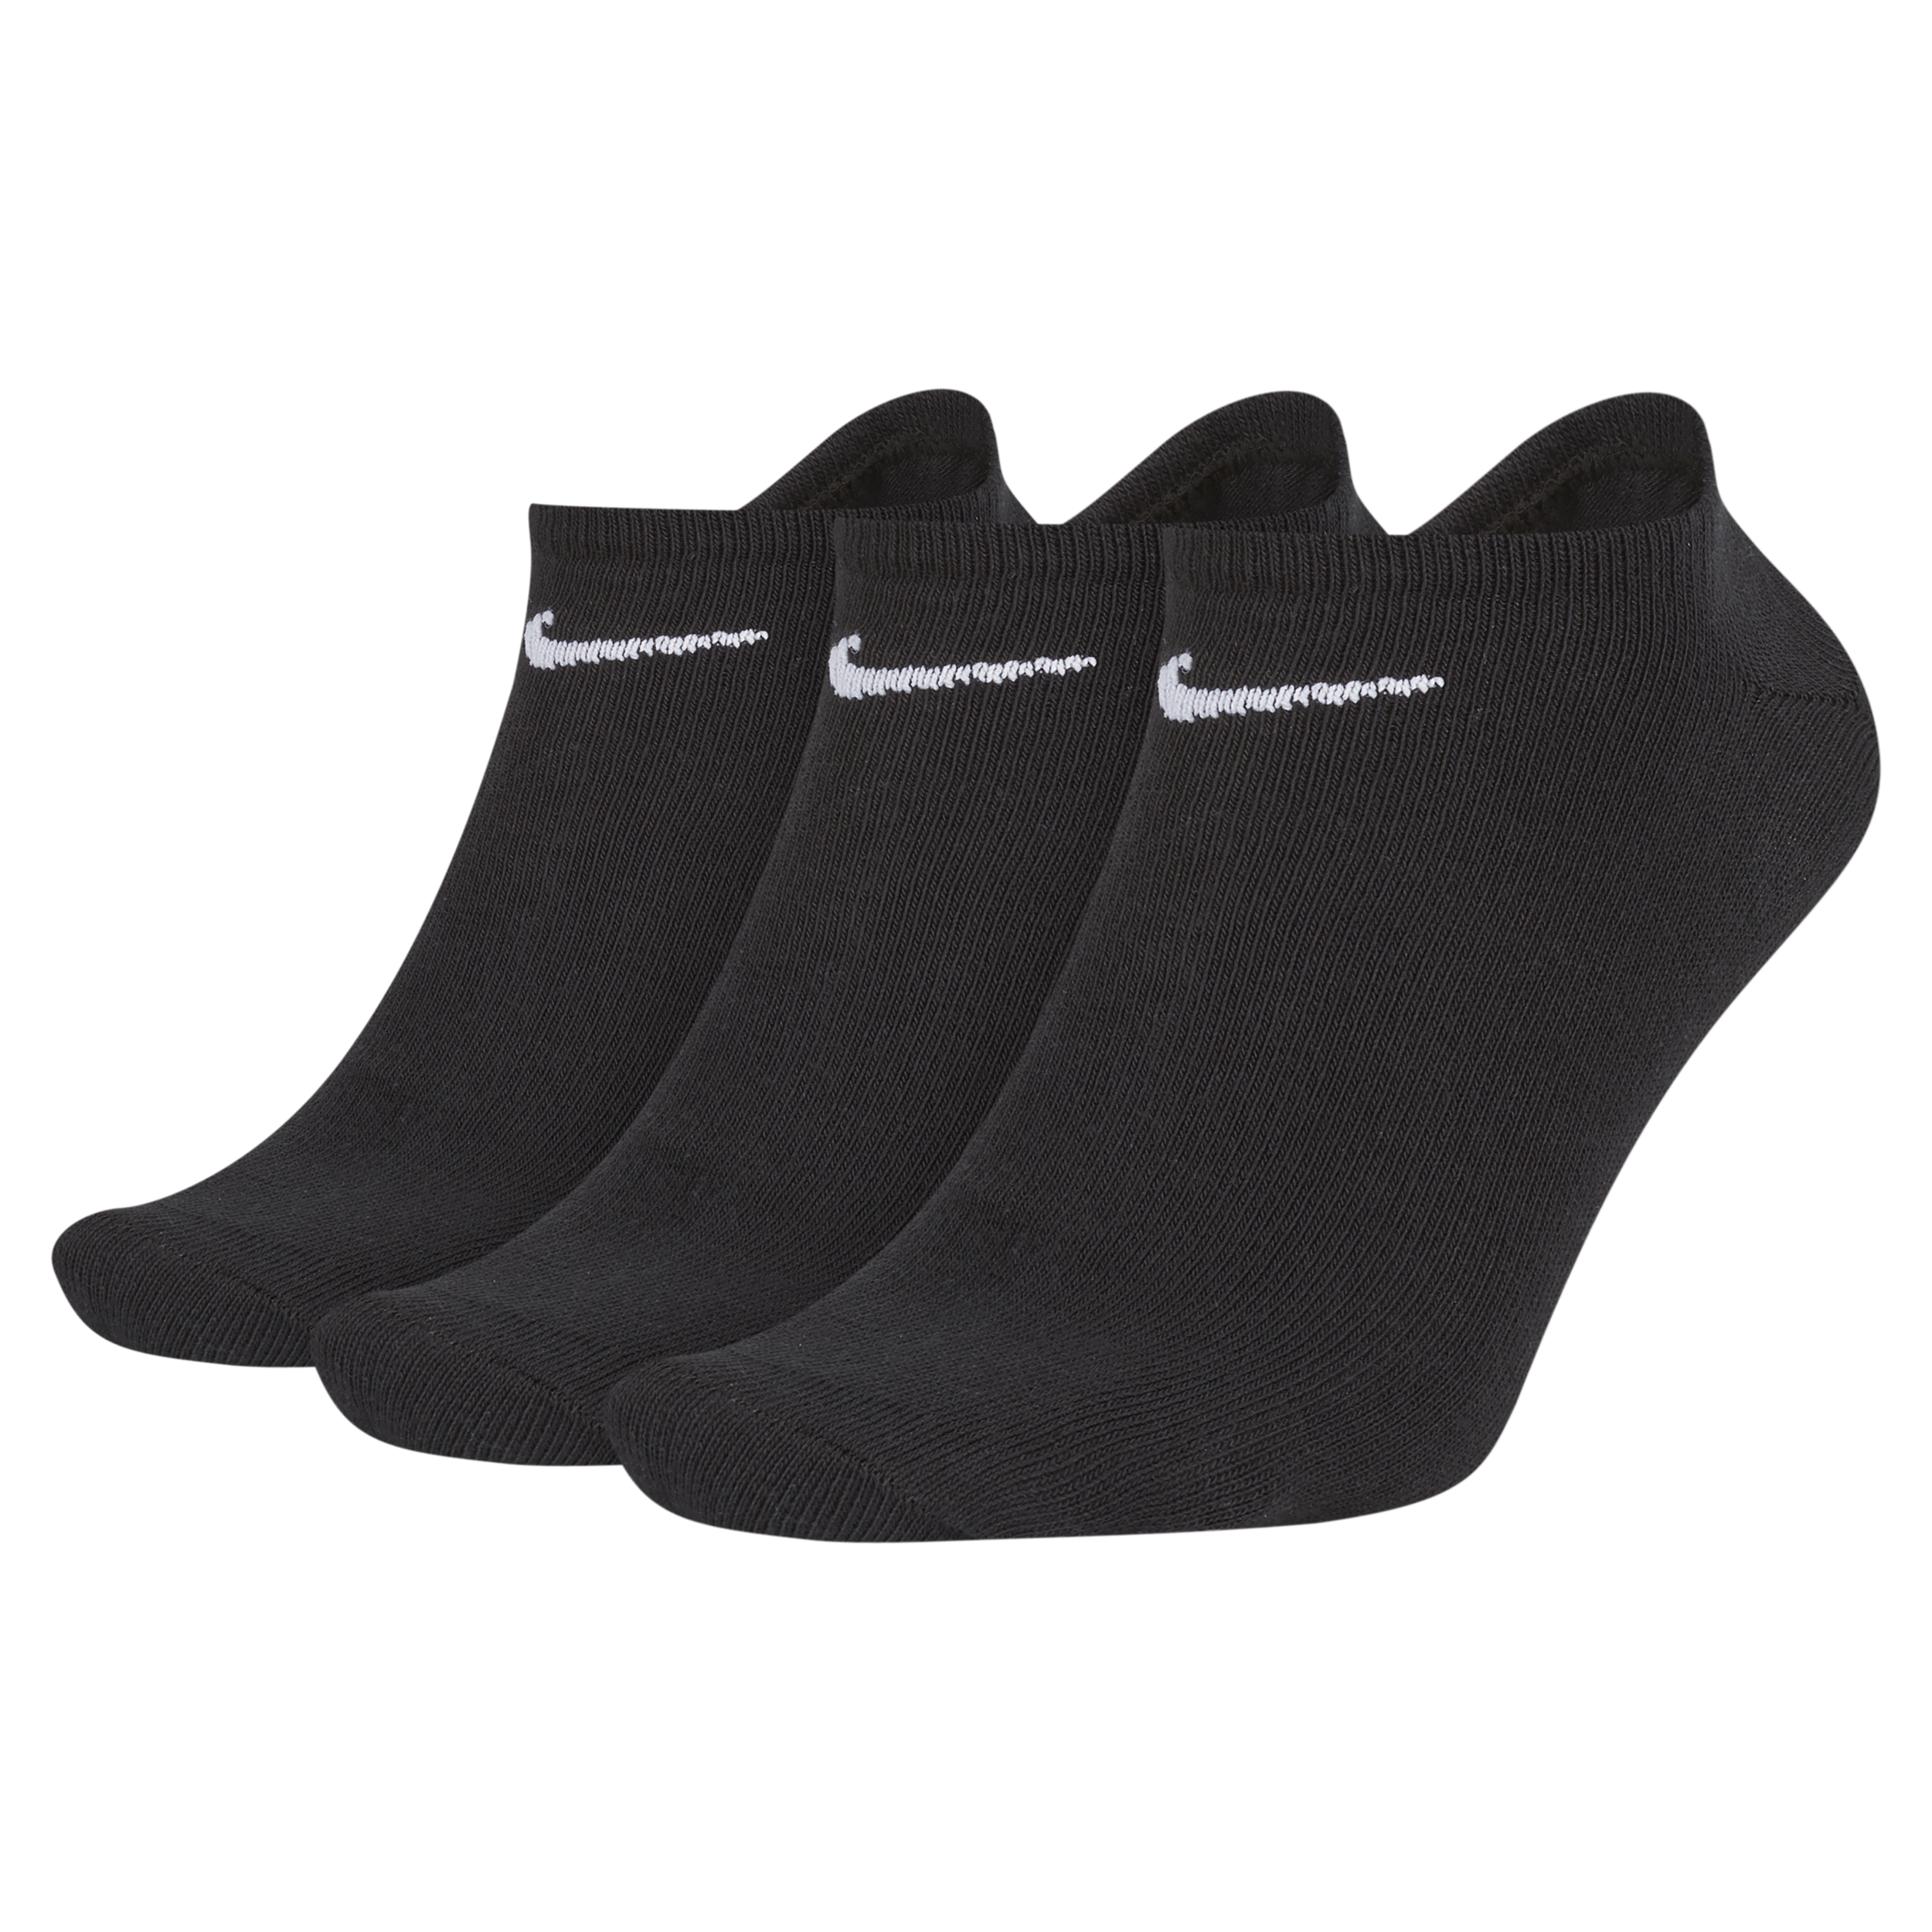 Nike Lightweight Onzichtbare trainingssokken (3 paar) - Zwart